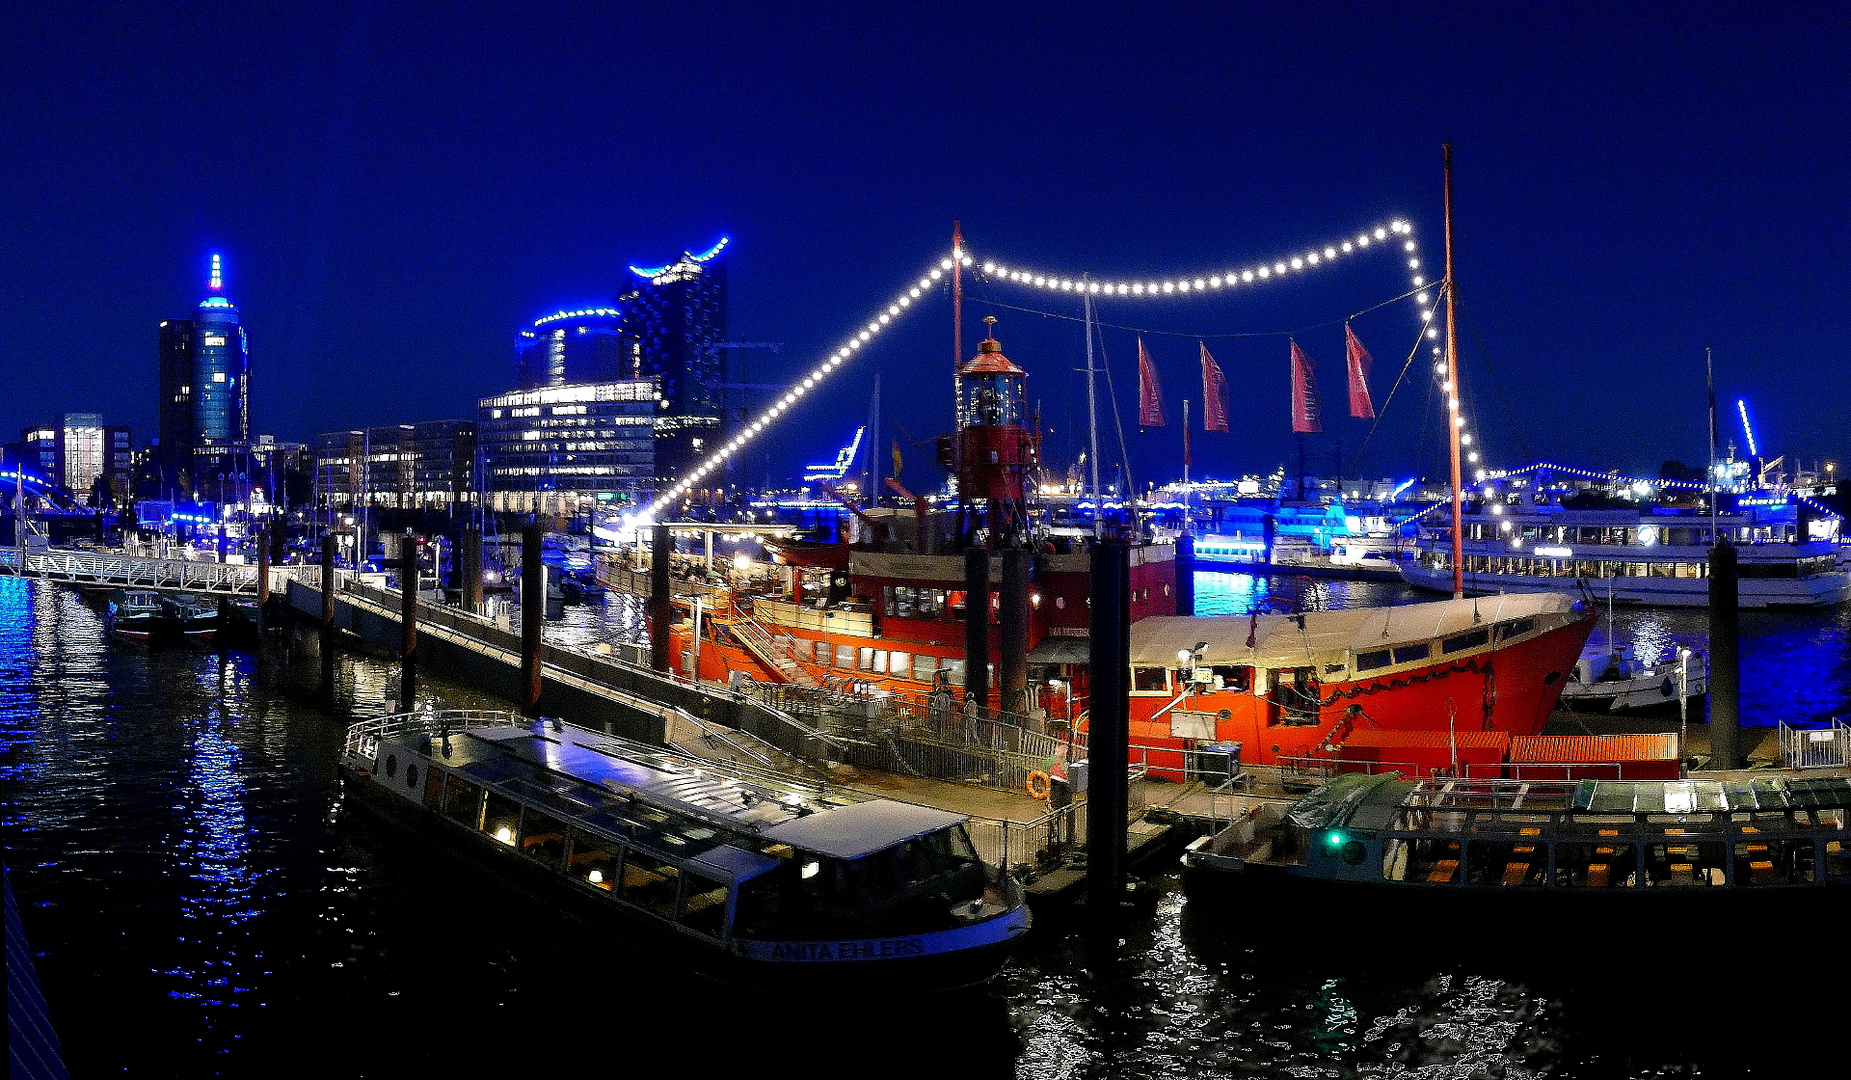 Panorama Feuerschiff @ Blue Port